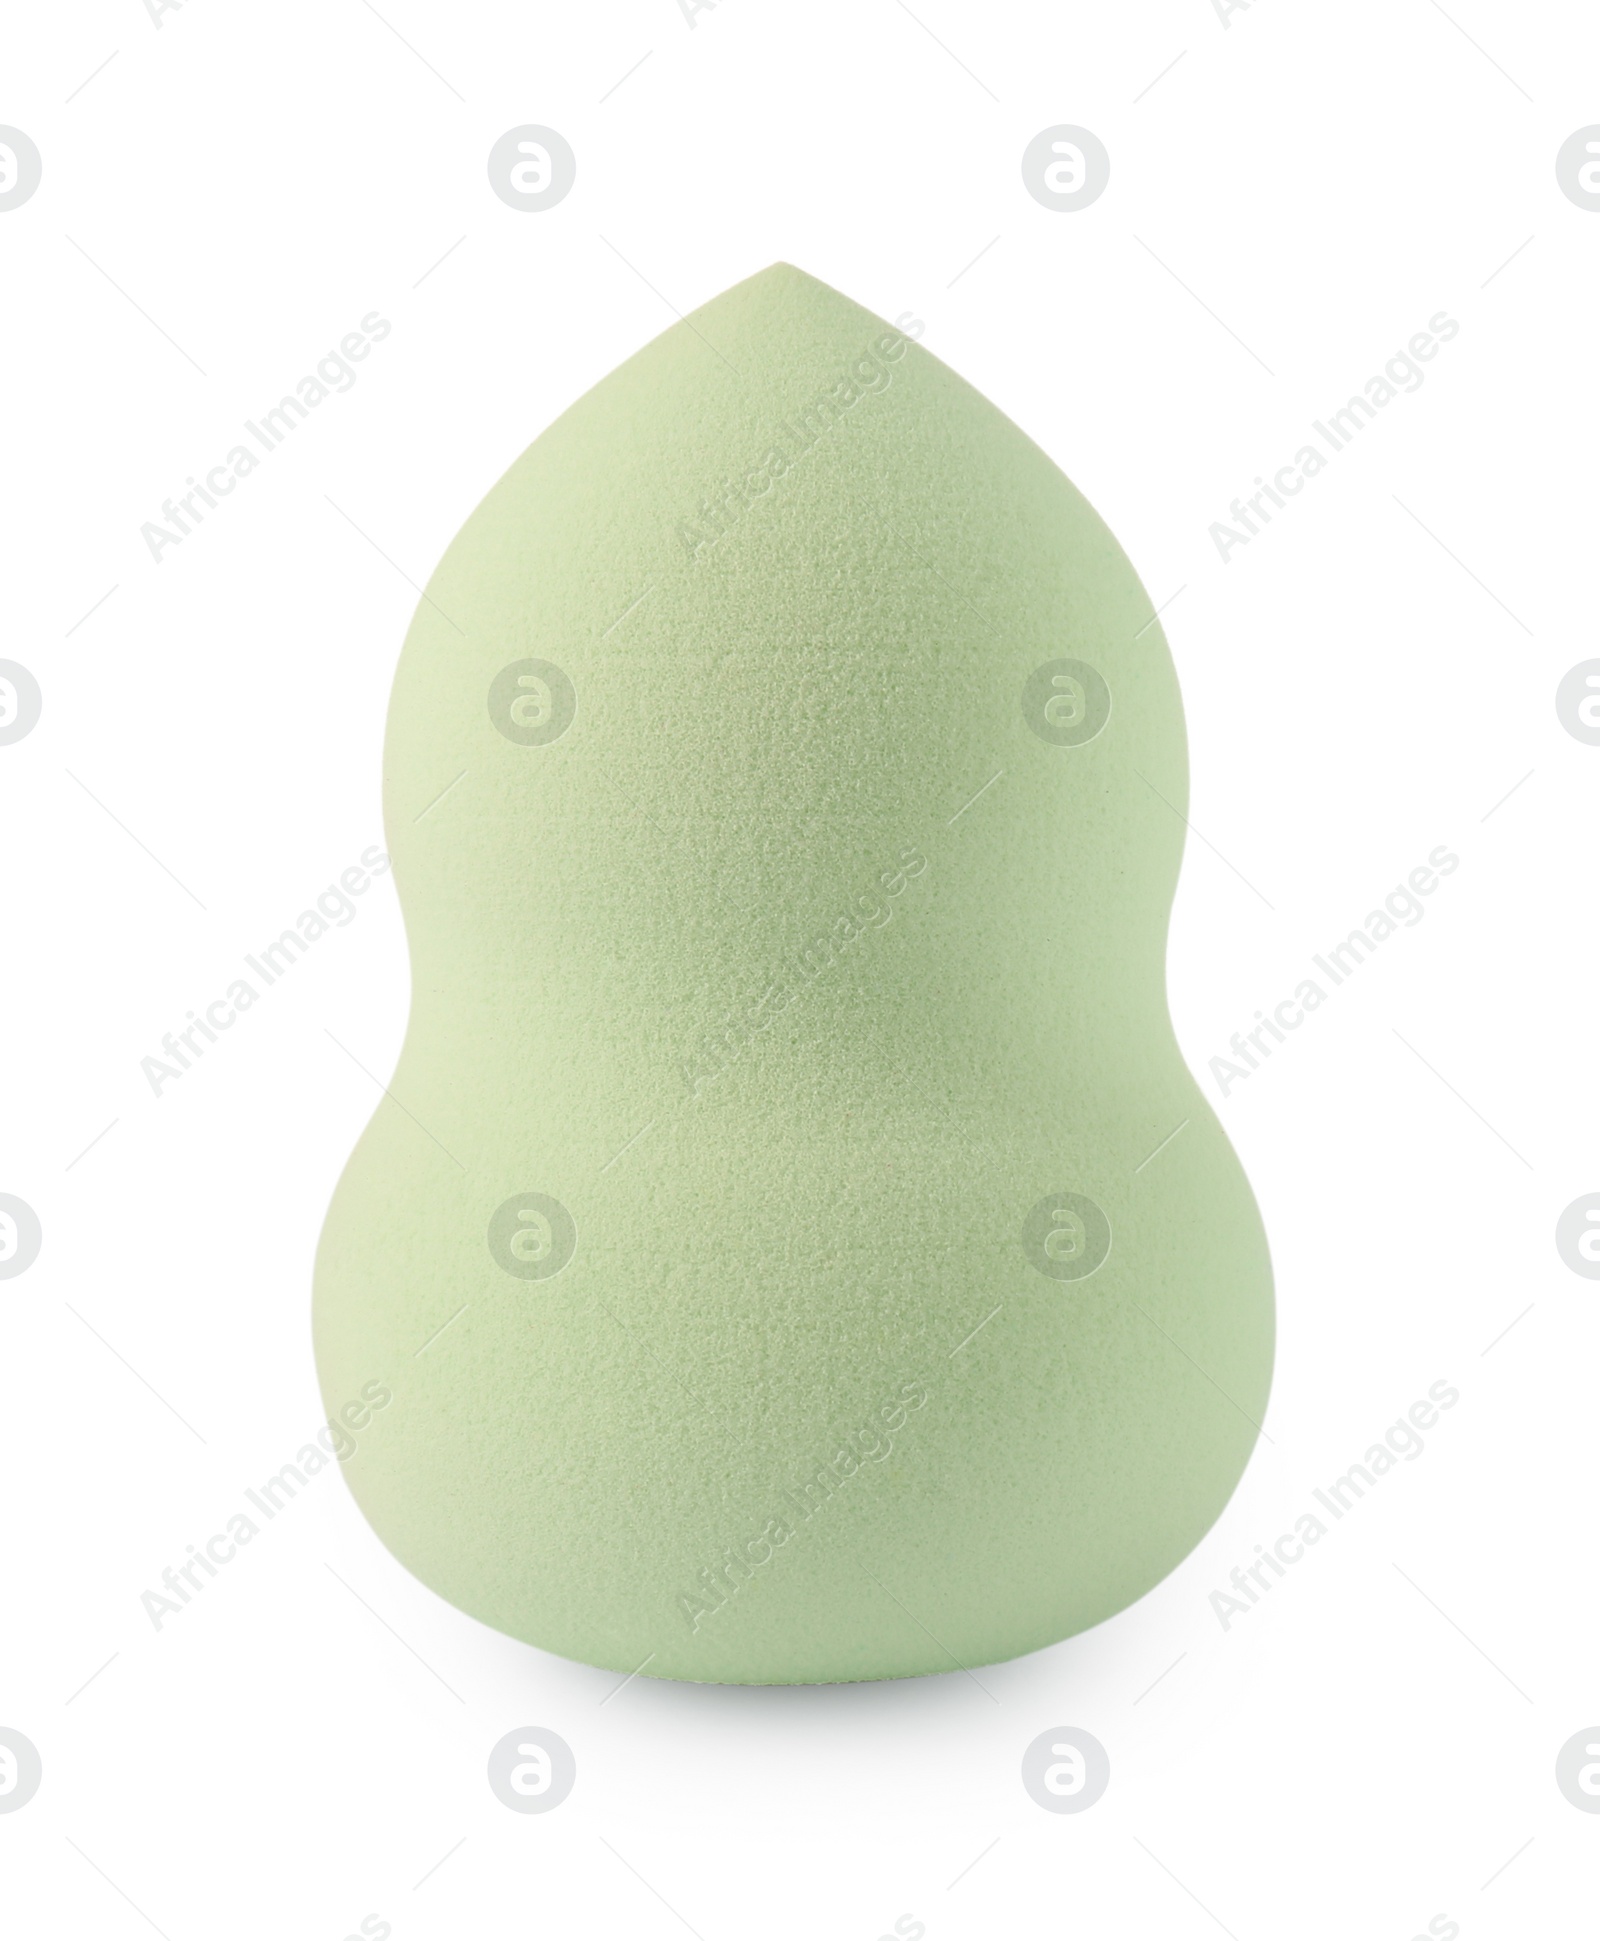 Photo of Light green makeup sponge isolated on white